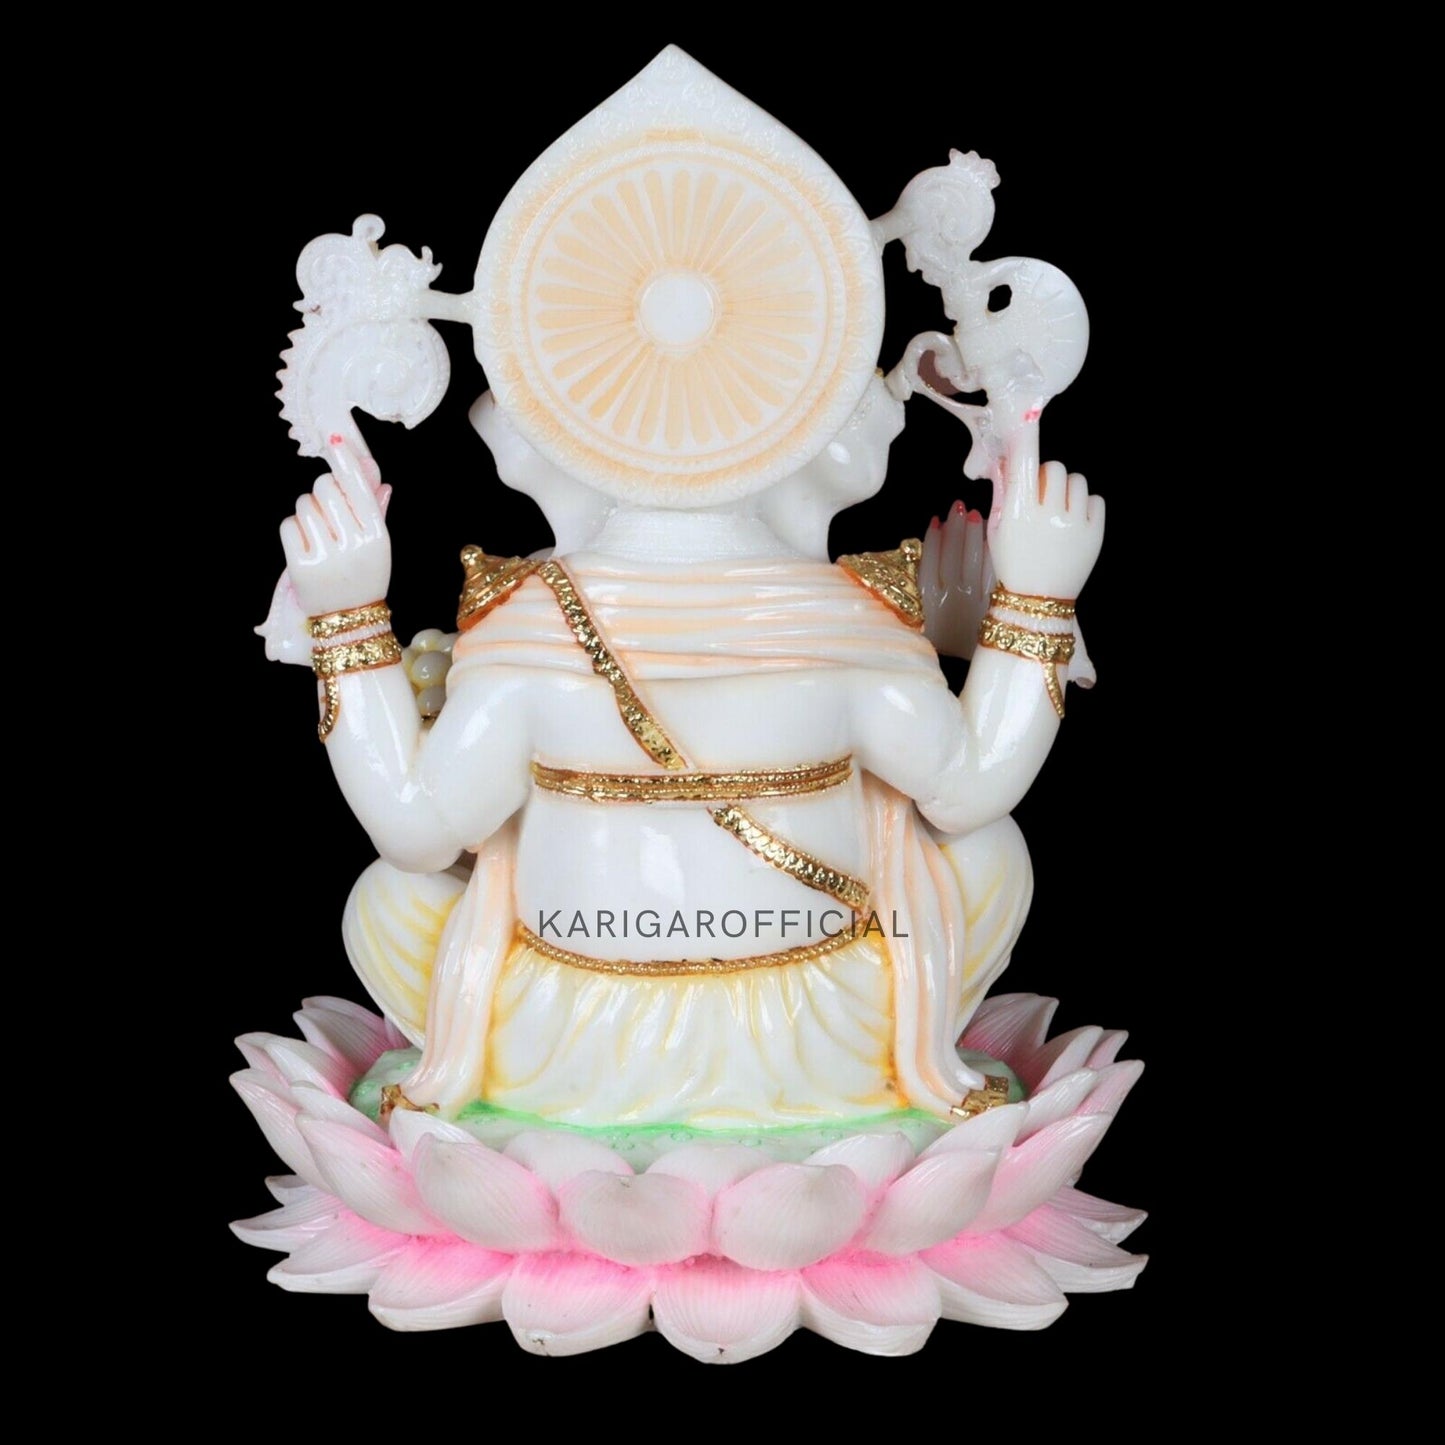 Ganesha Murti Statue Sitting on Lotus flower, Gold Leaf Ganpati Figurine, Large Marble Ganapati Idol Vinayak Deity, Large Indian White Elephant God, Housewarming Gifts Sculpture, (12 inches)